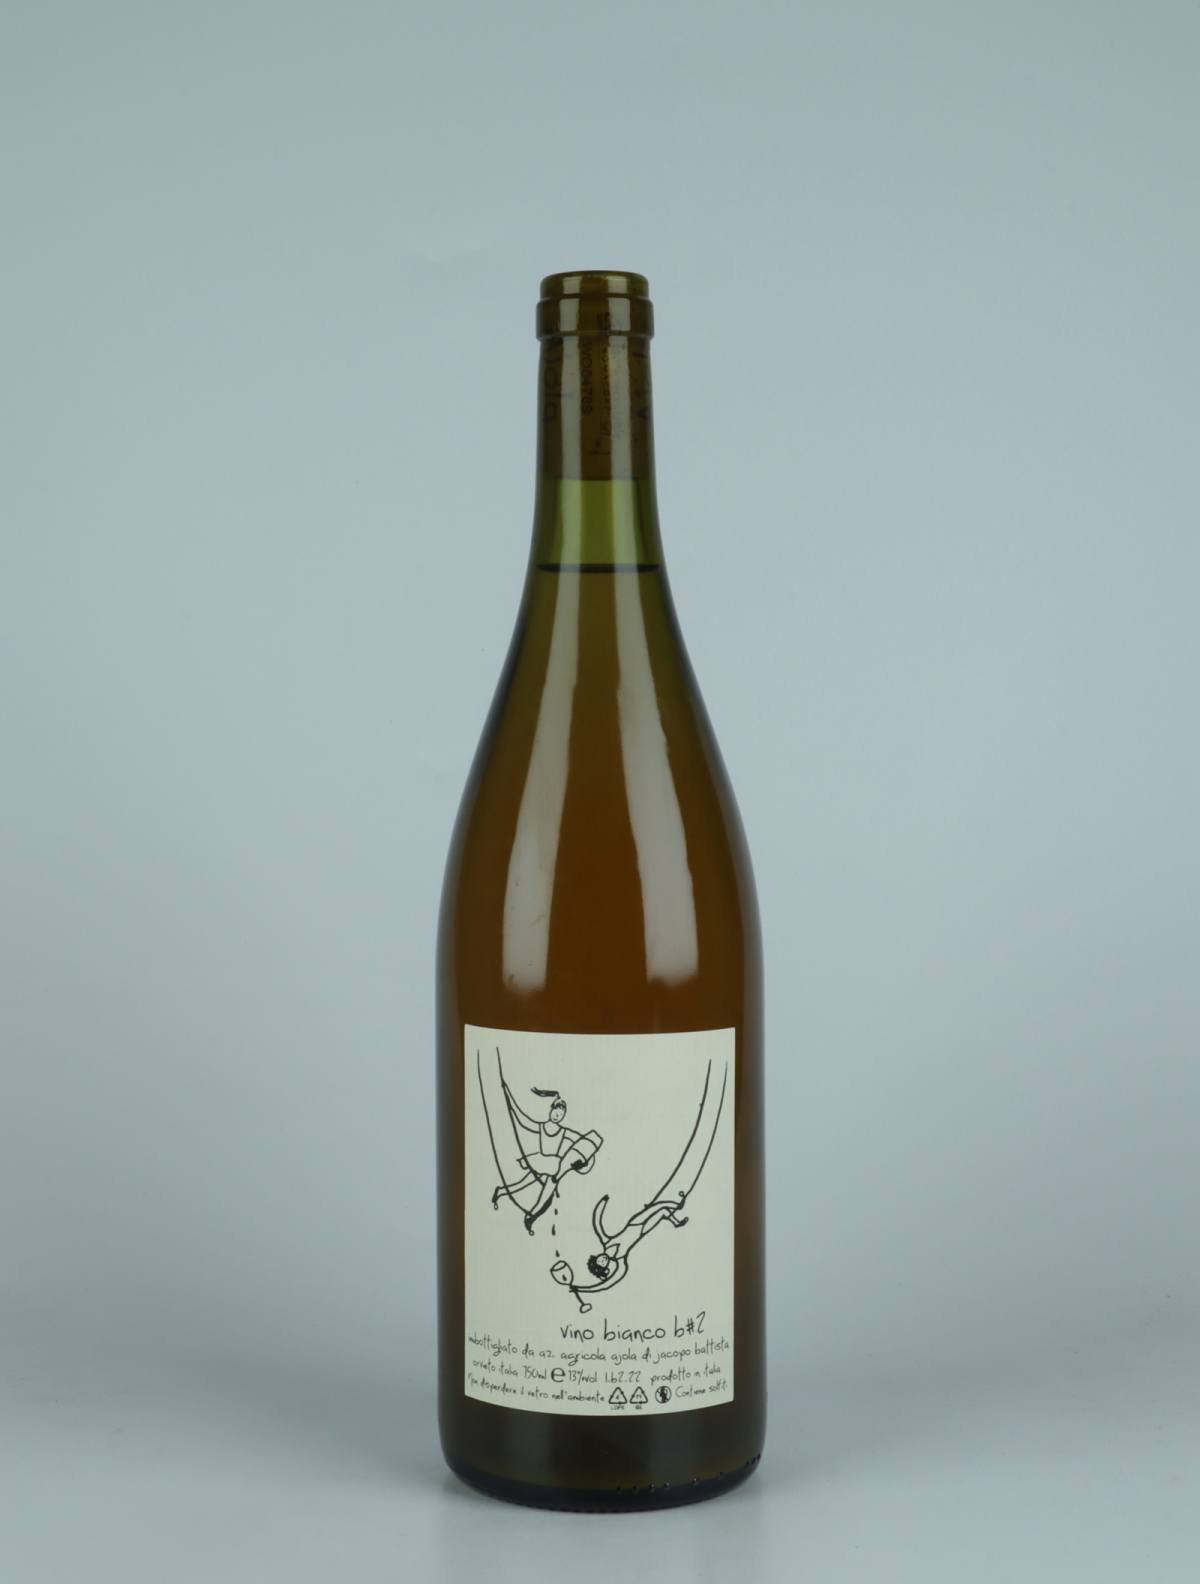 En flaske 2022 Vino Bianco #2 Orange vin fra Ajola, Umbrien i Italien